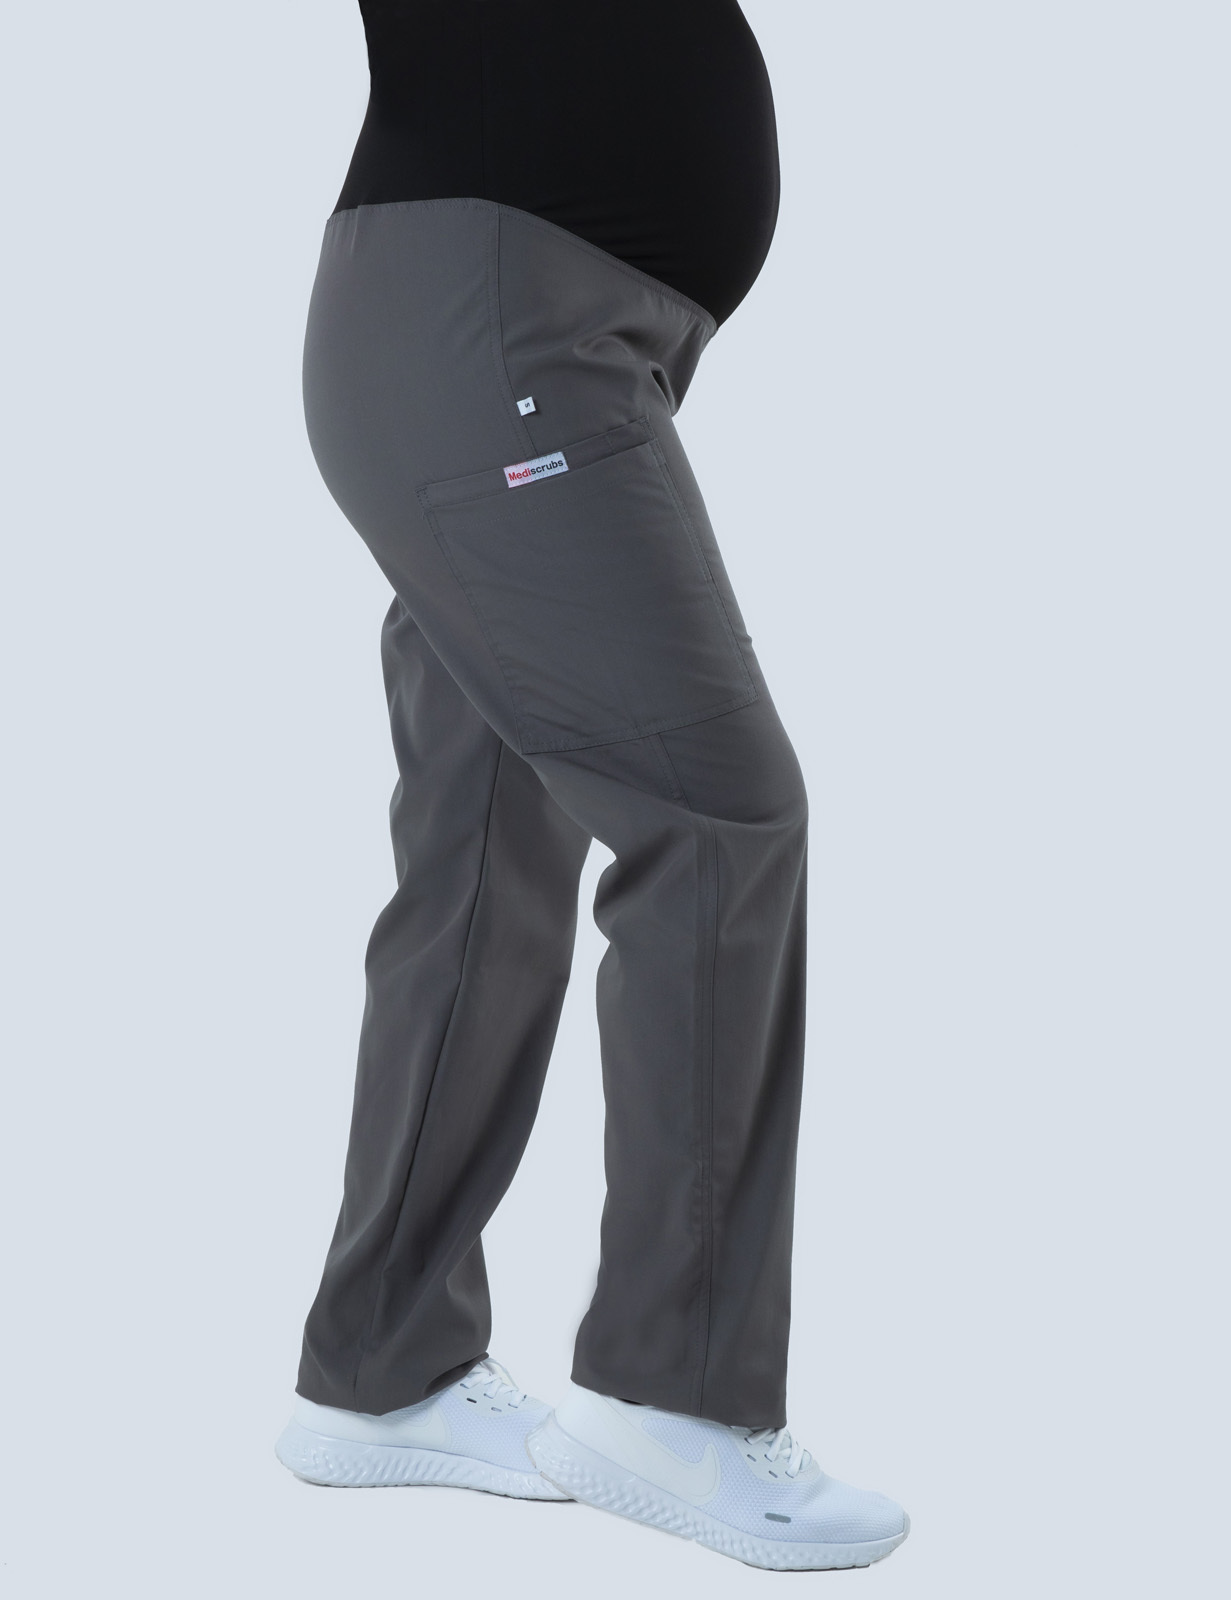 Maternity Pants - Steel Grey - X Small - 2